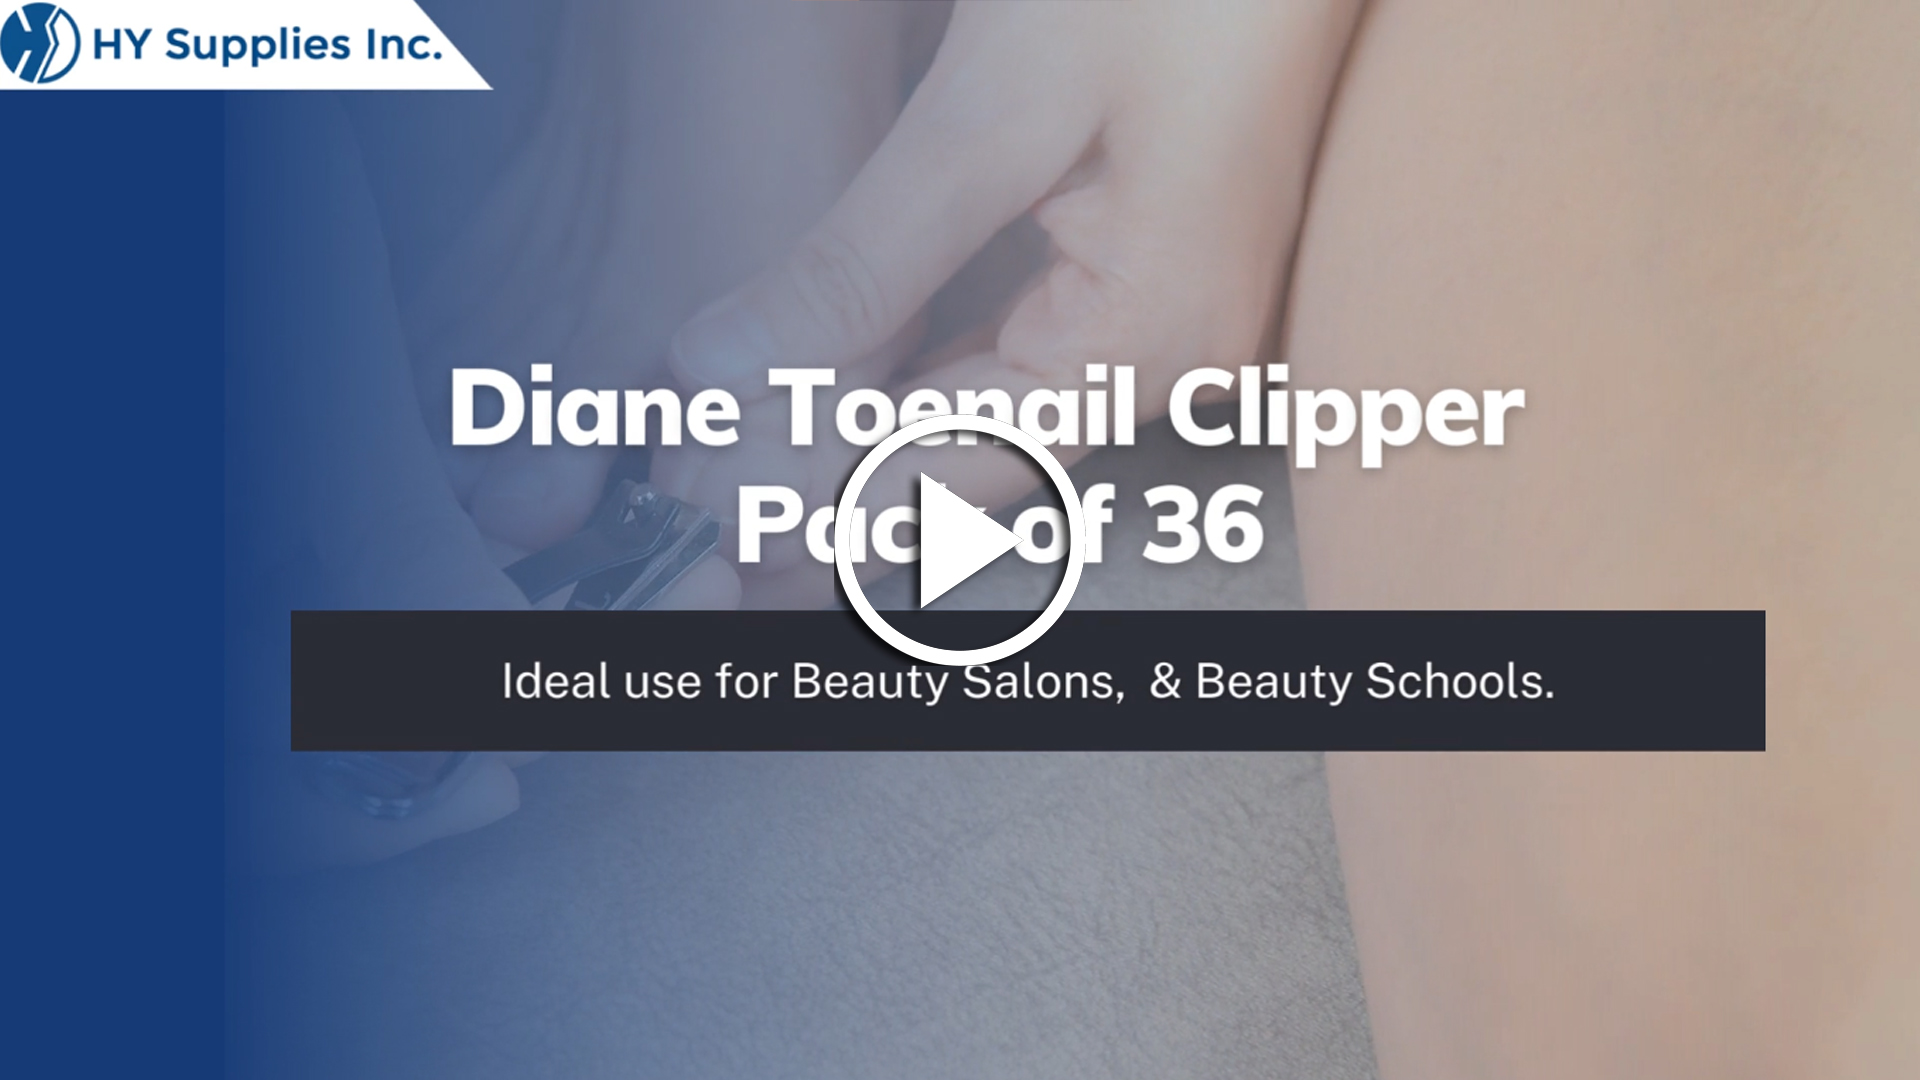 Diane Toenail Clipper Bin Start - Pack of 36